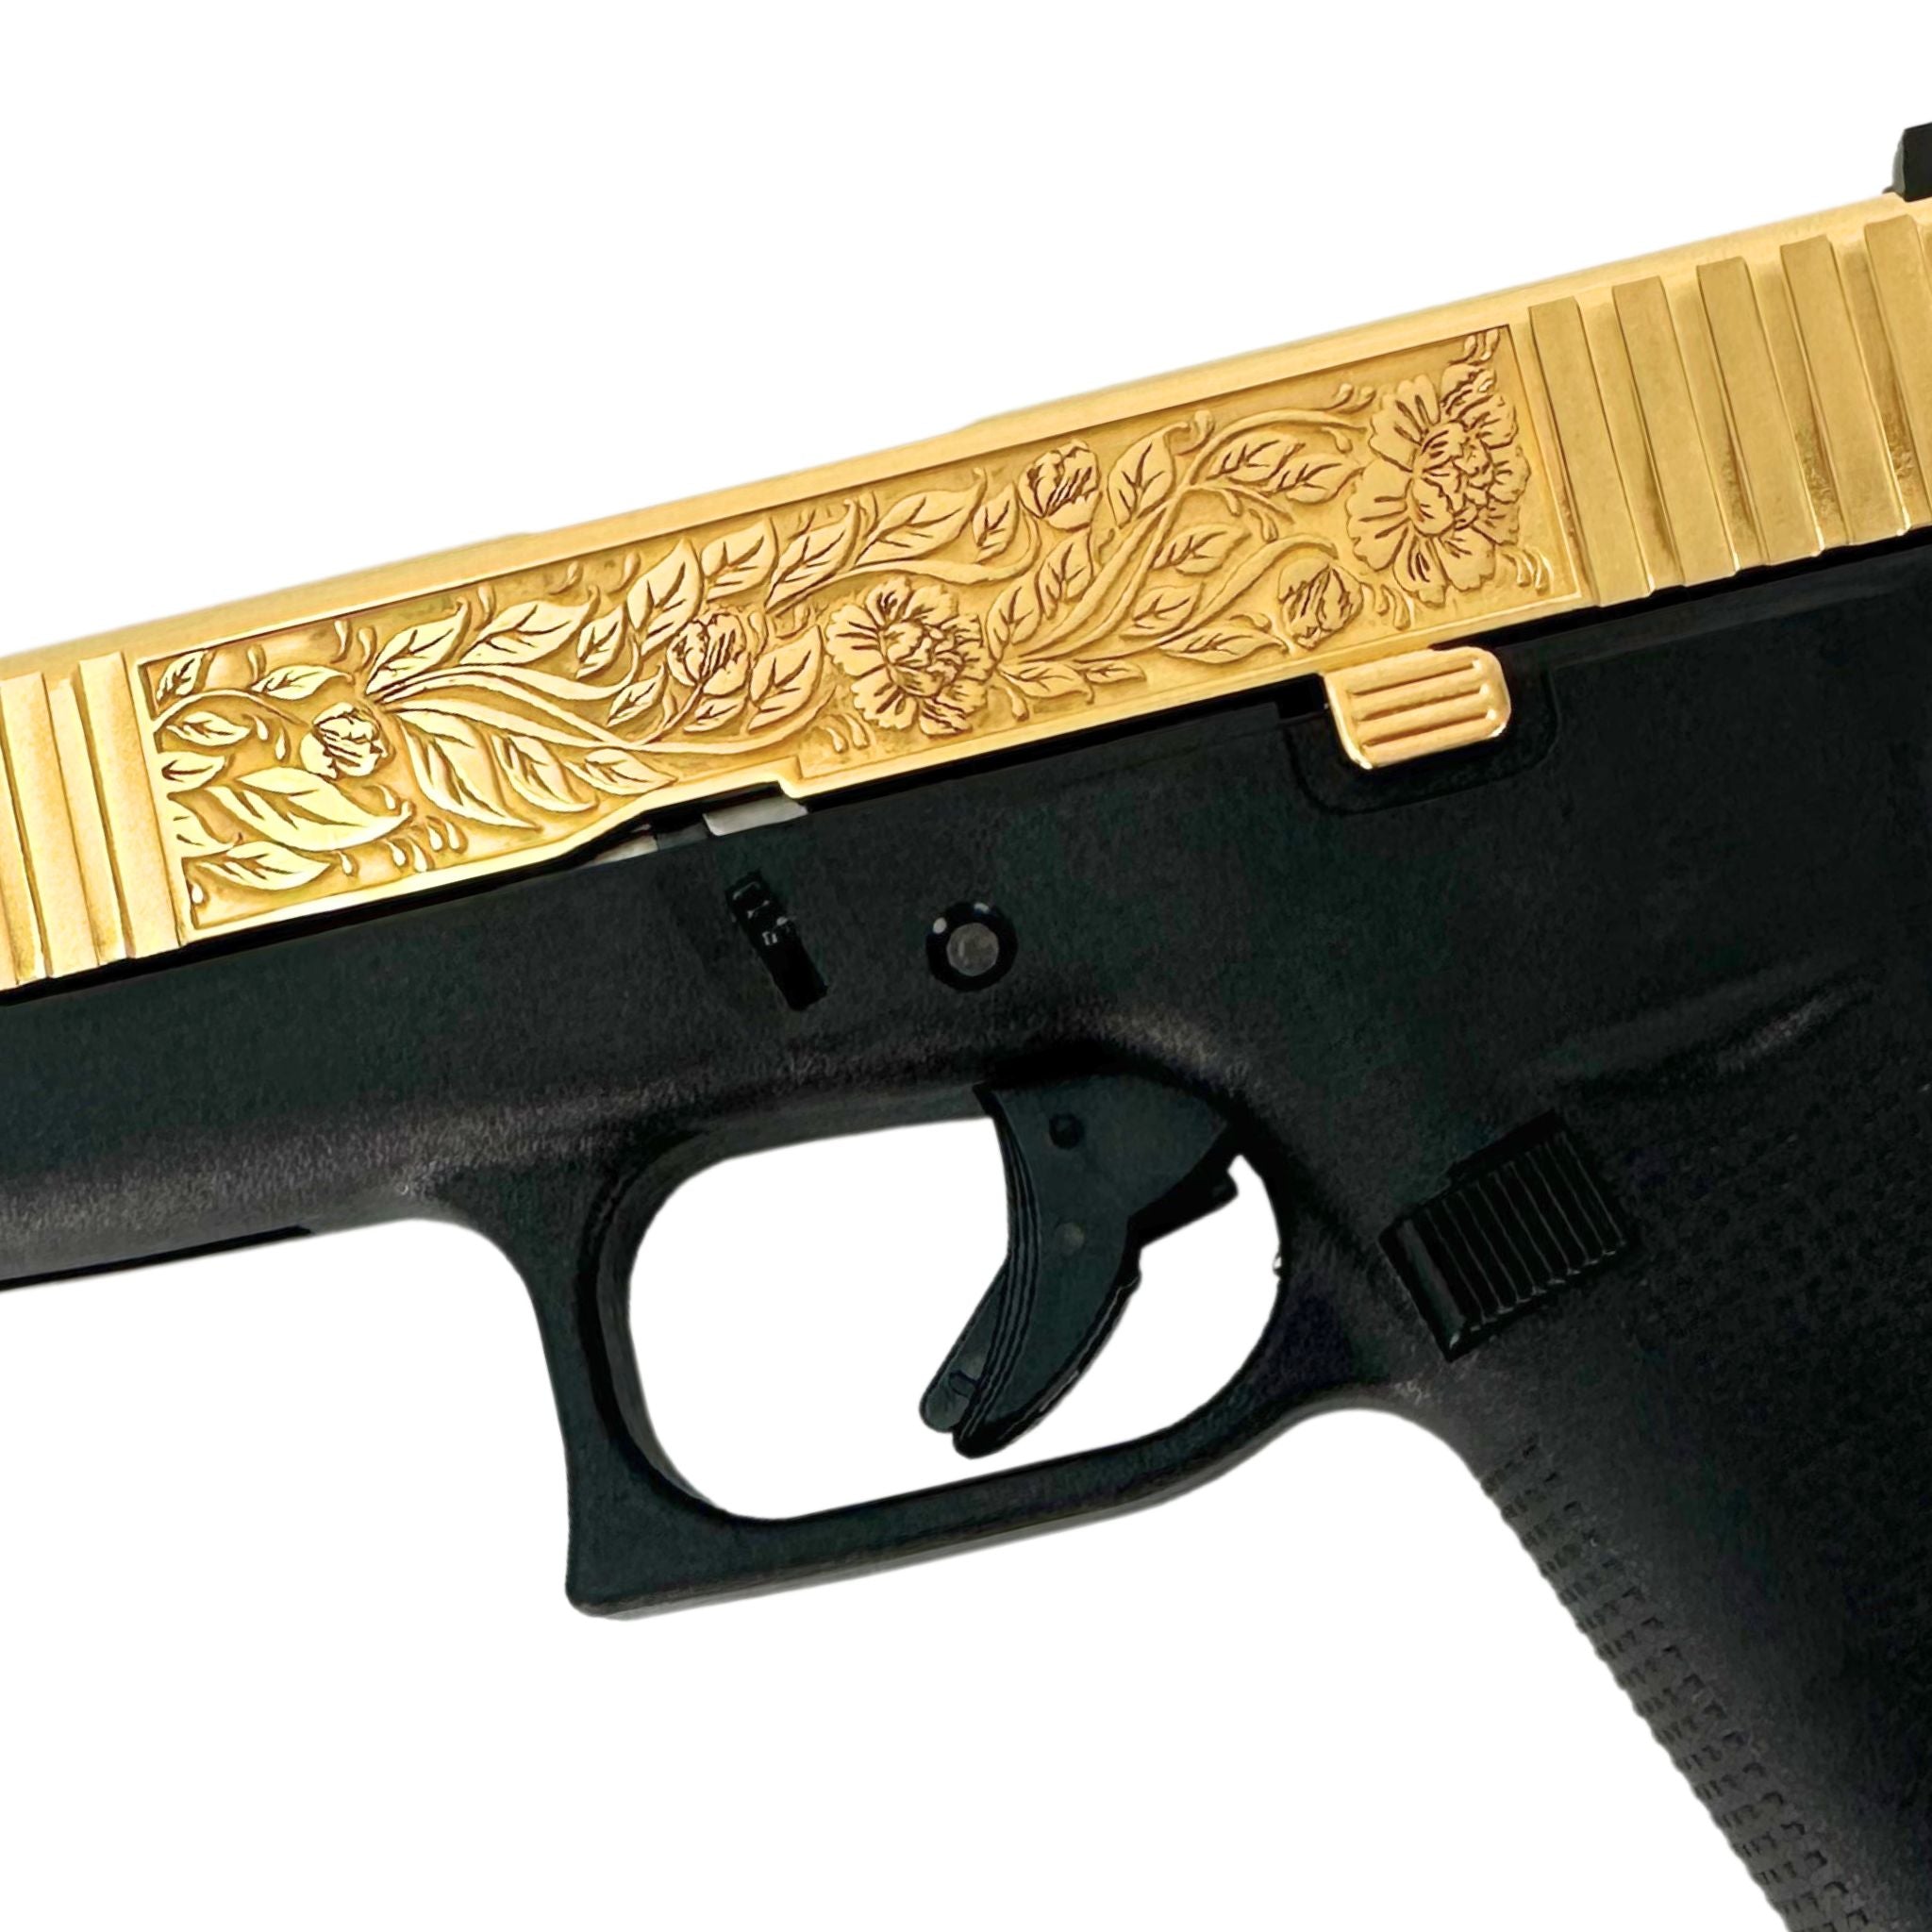 Glock G43X Subcompact, 9mm, Italian Renaissance, 24 Karat Gold Plated, SKU: 6823939178598, 24 karat gold gun, 24 Karat Gold Firearm  